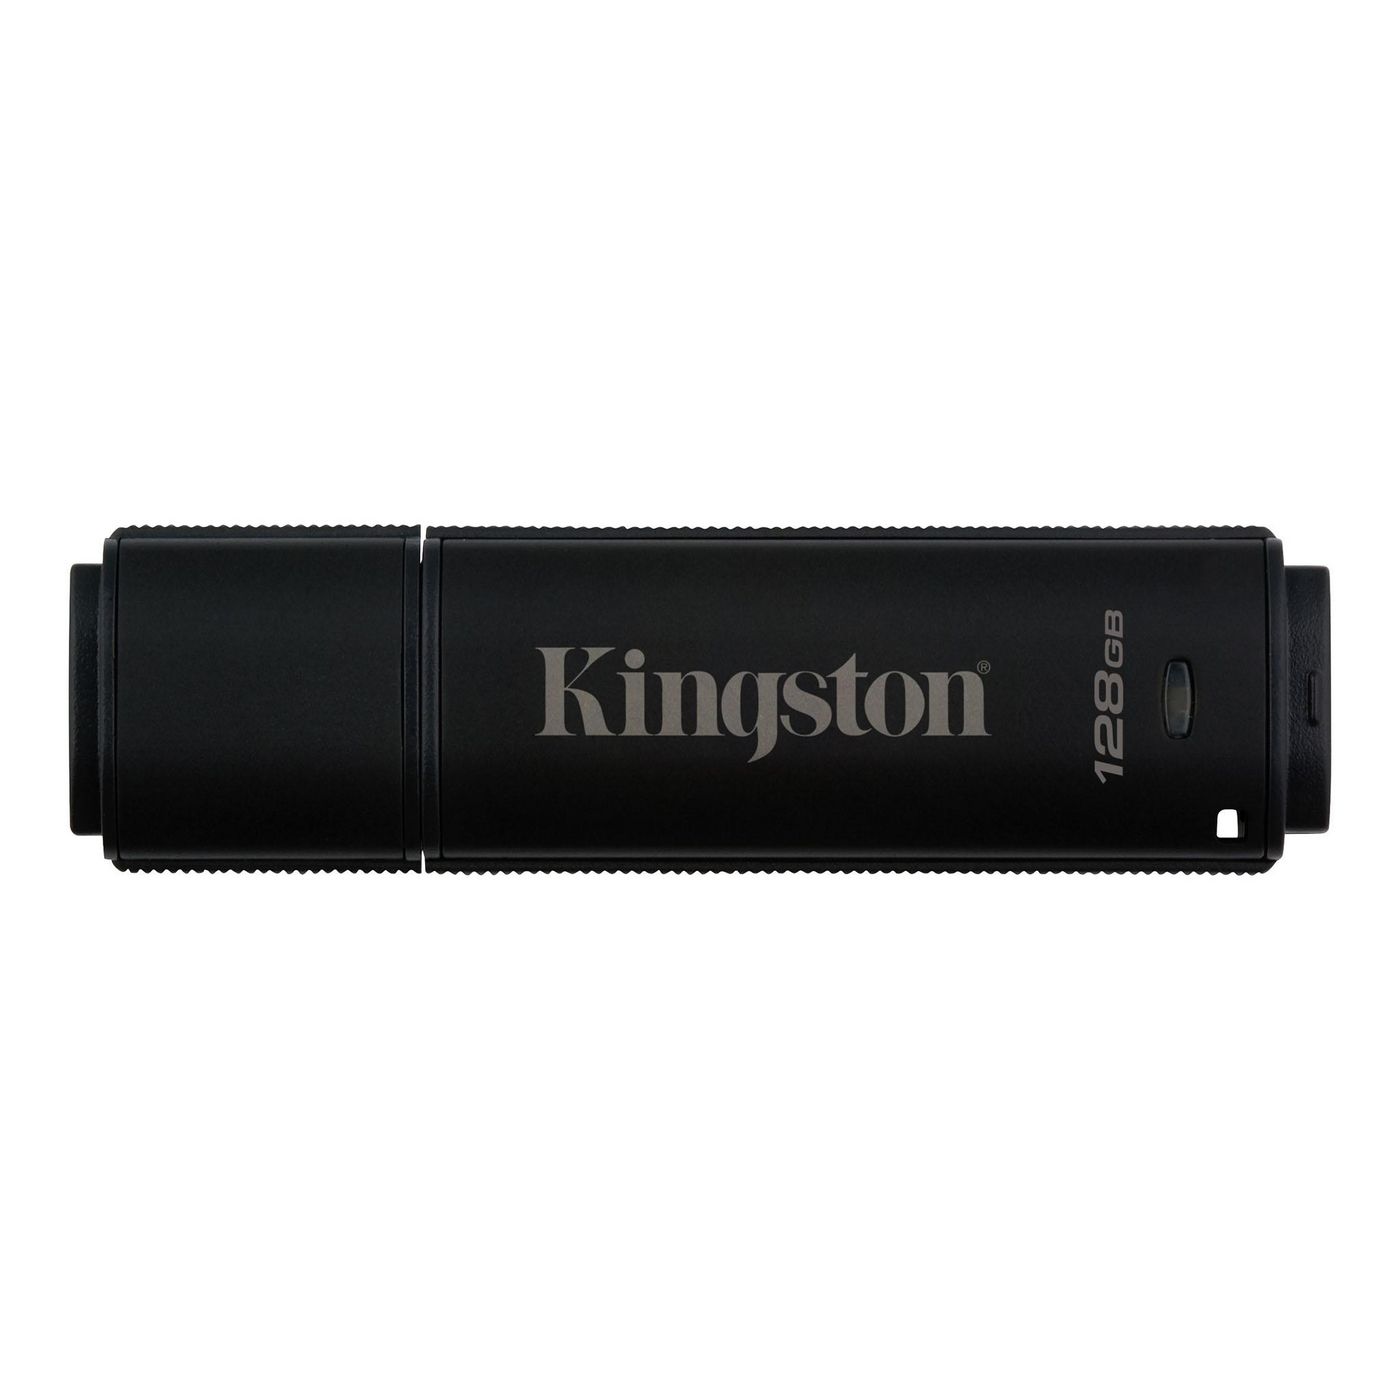 Kingston DT4000G2DM128GB W126824333 128GB DT4000G2DM 256bit 